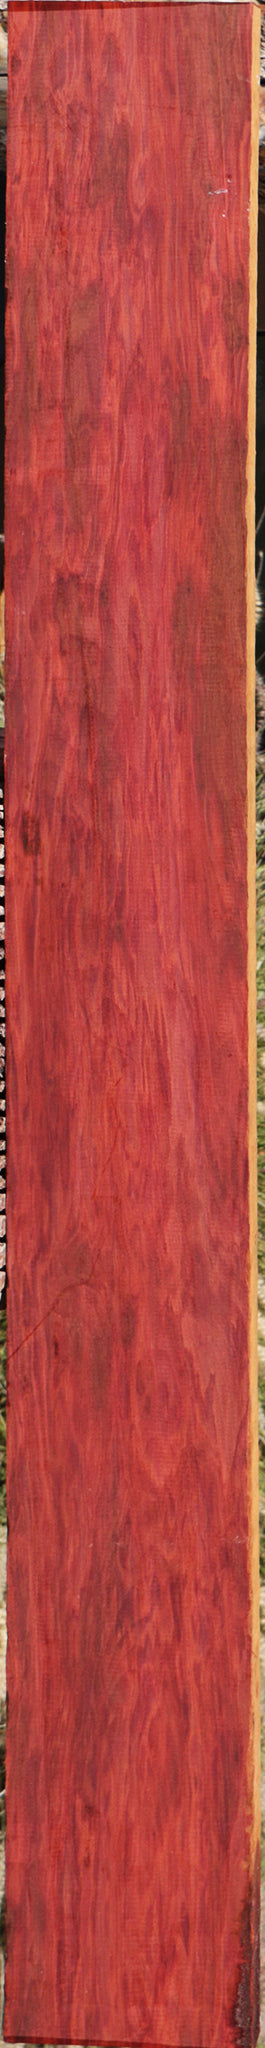 Extra Fancy Redheart Lumber